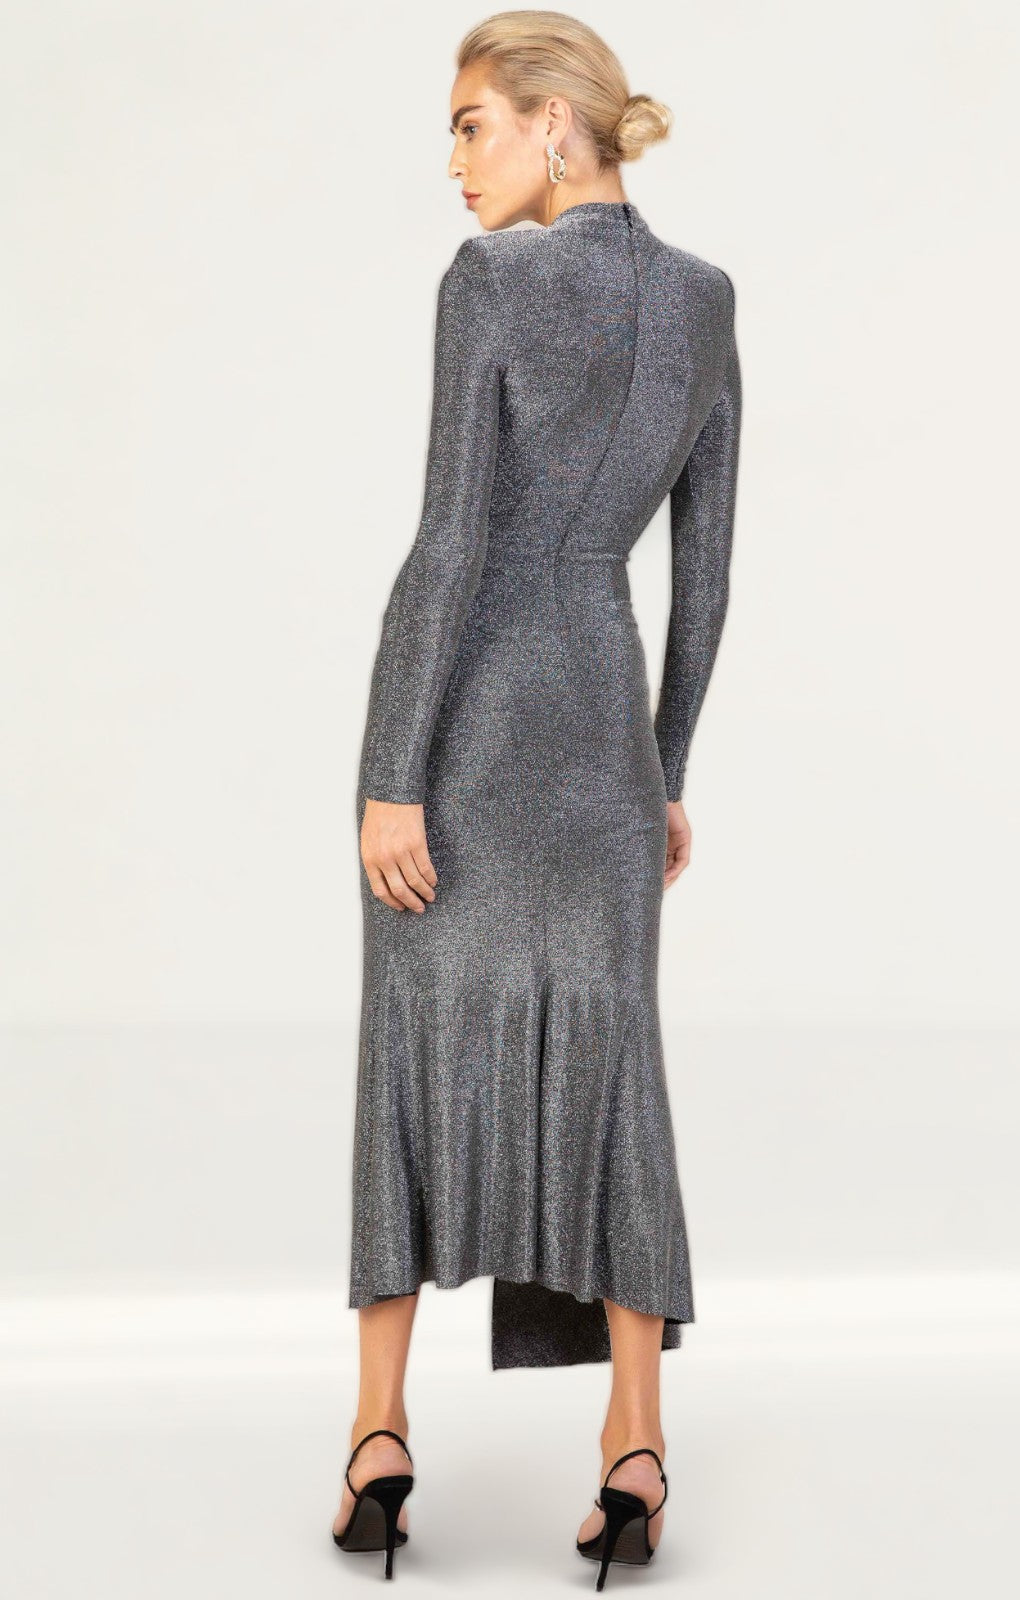 Misha Silver Marcella Dress product image